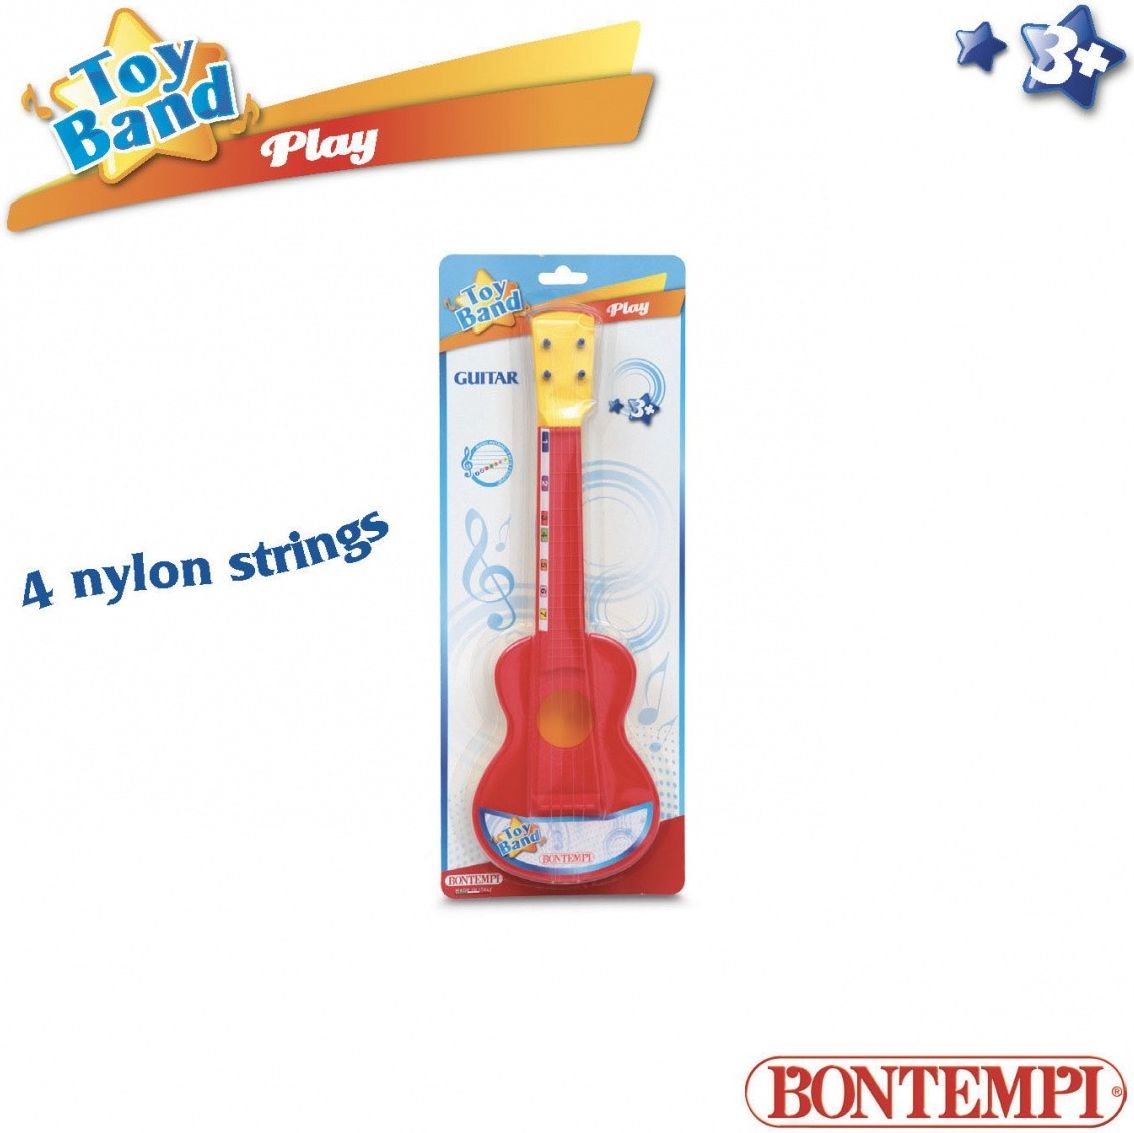 Bontempi Spanish guitar 4-string, 40 cm (041-12066)